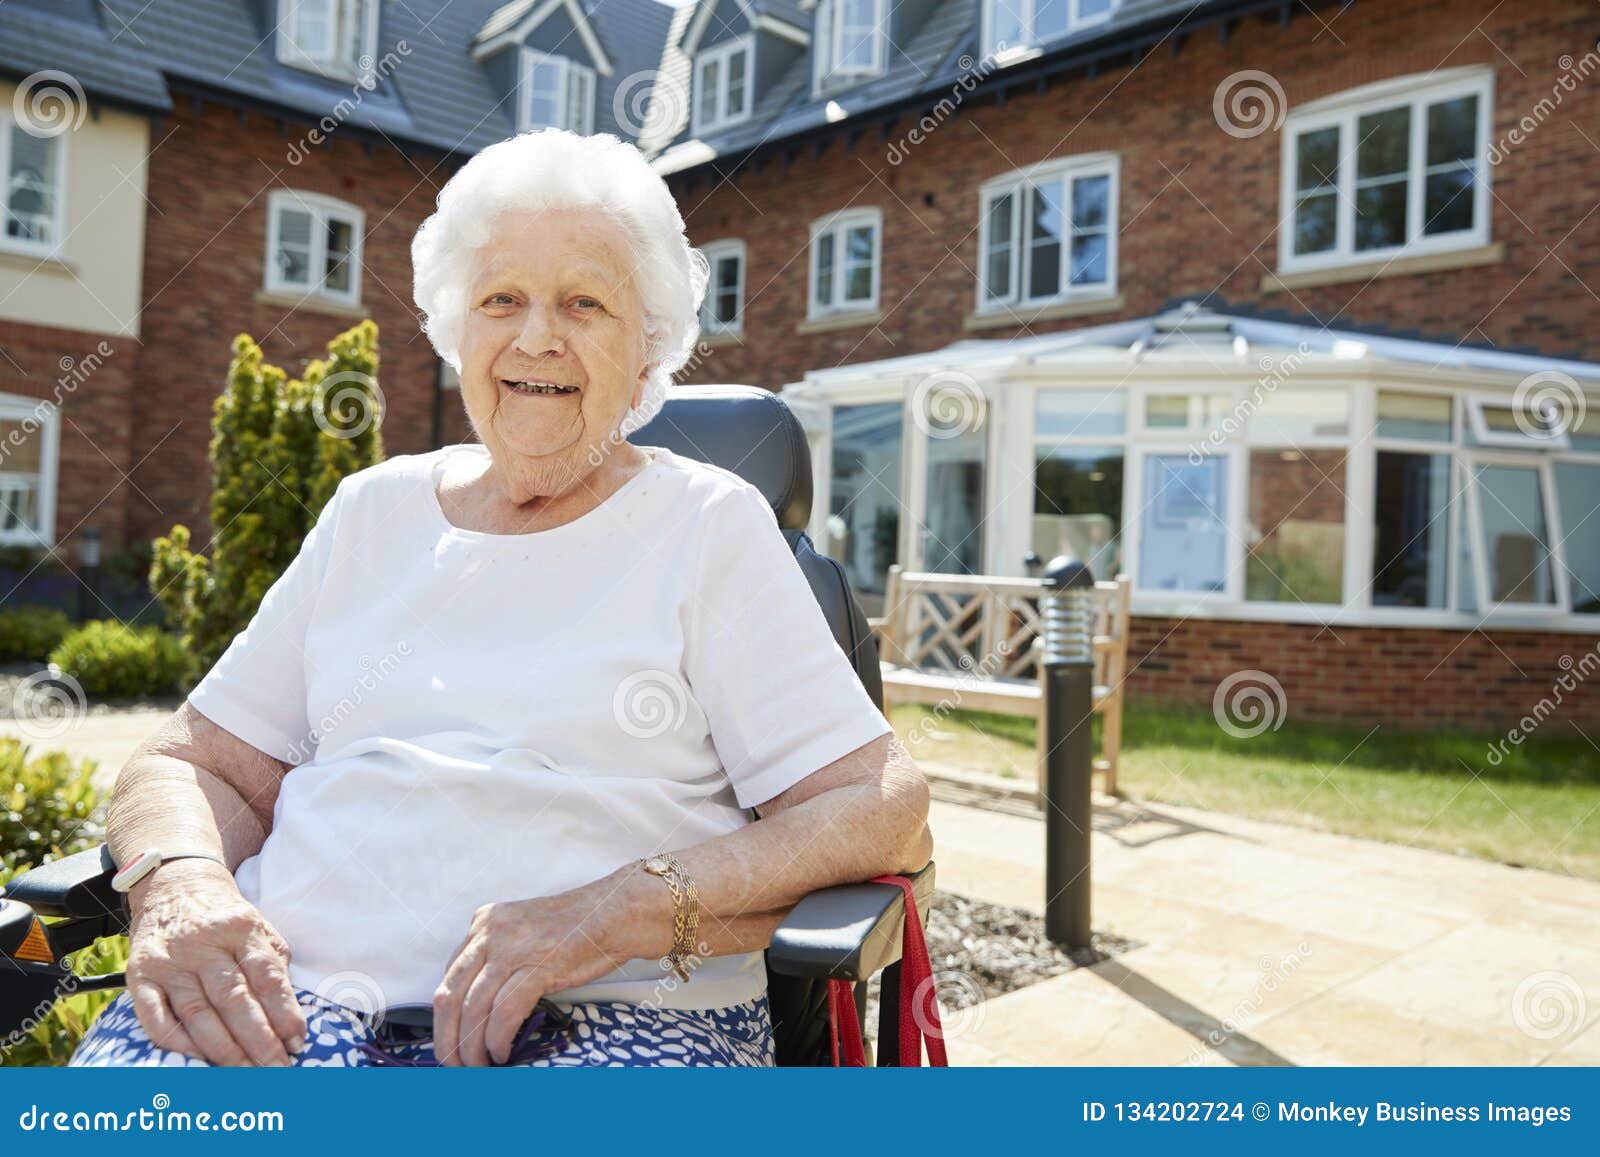 portrait of senior woman sitting outside retirement home in motorized wheelchair